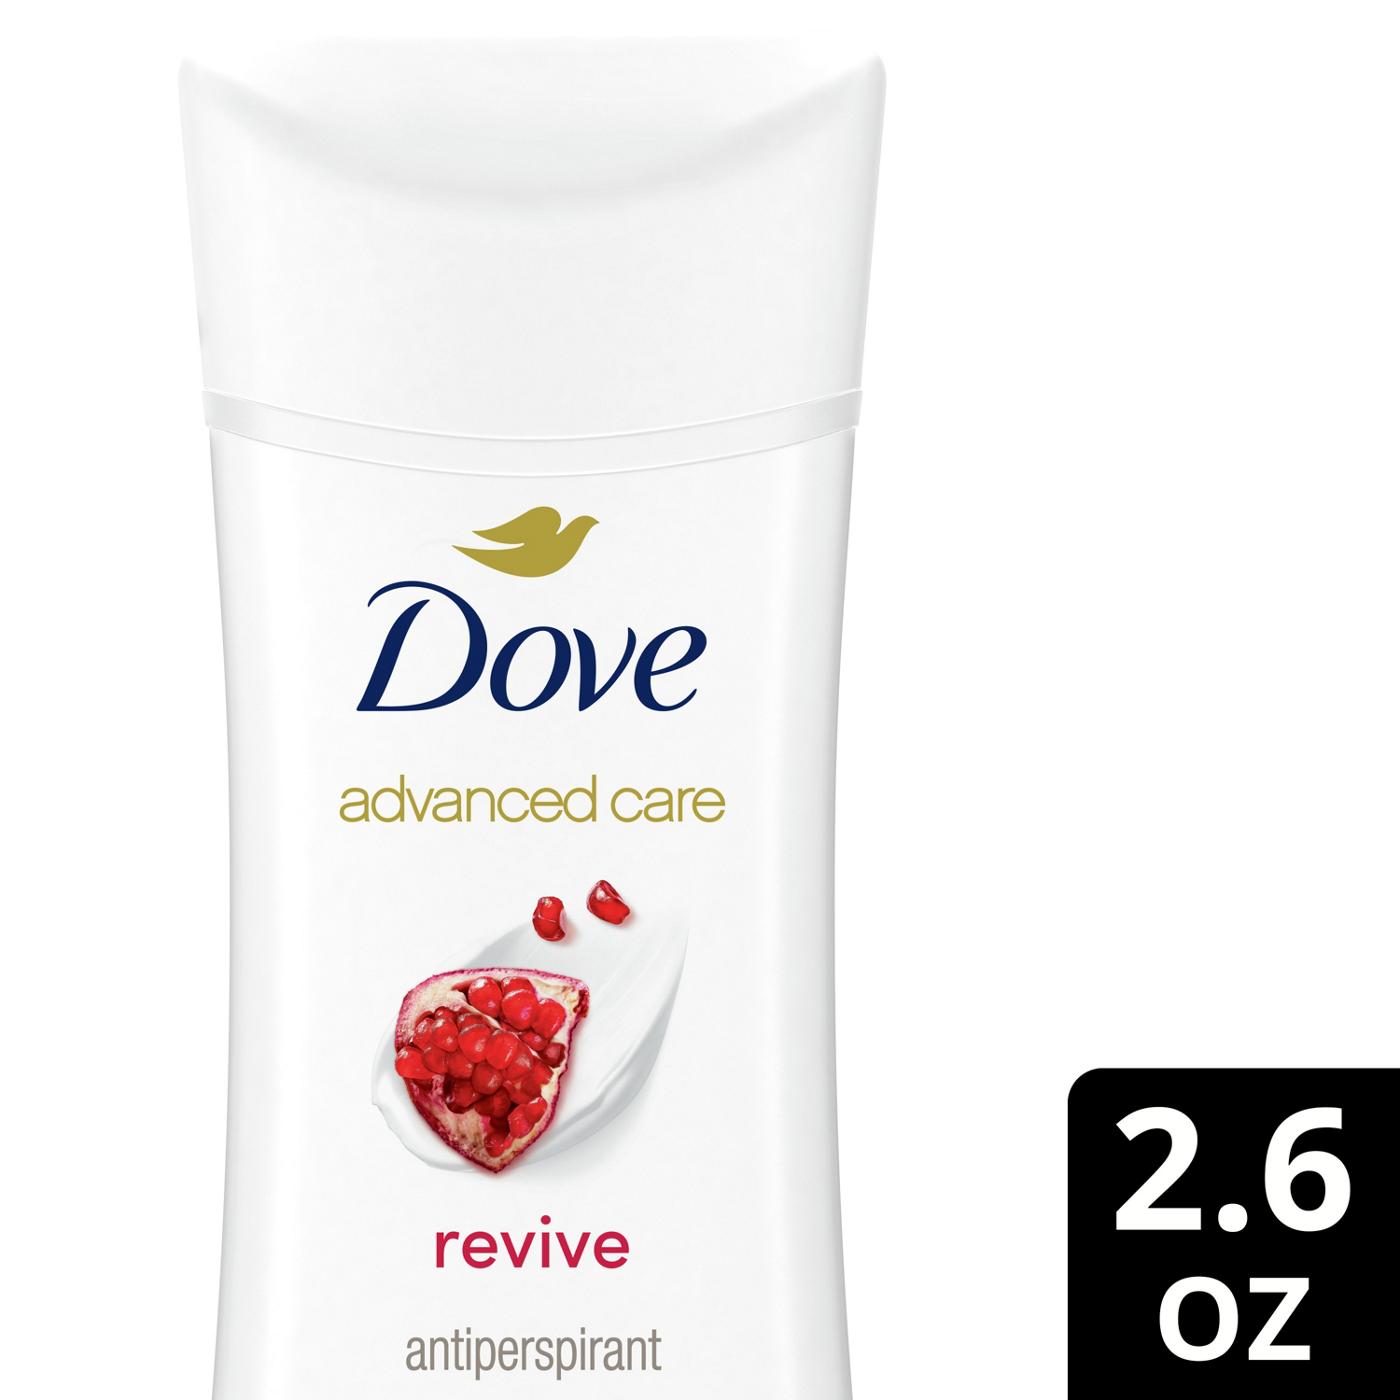 Dove Advanced Care Antiperspirant Deodorant Stick Revive; image 8 of 10